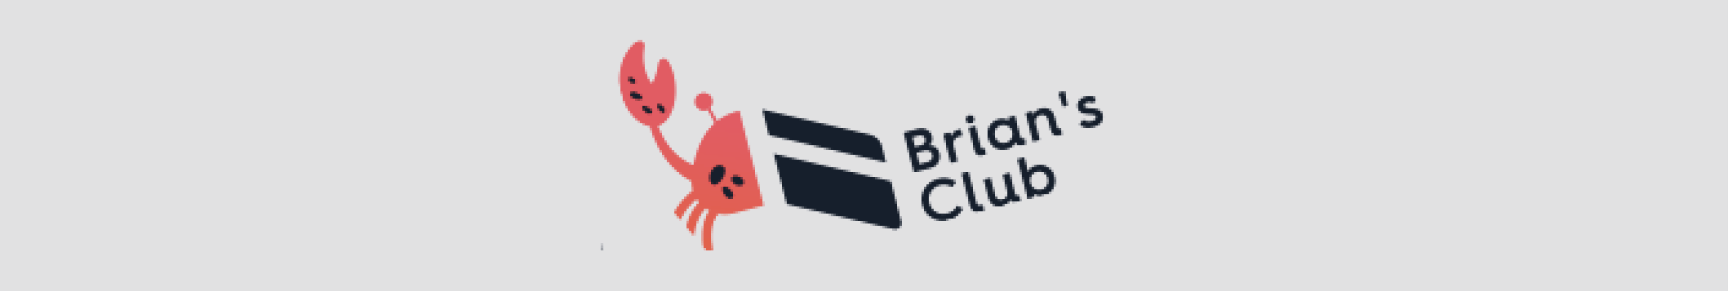 Brief Bio: Brian’s Club